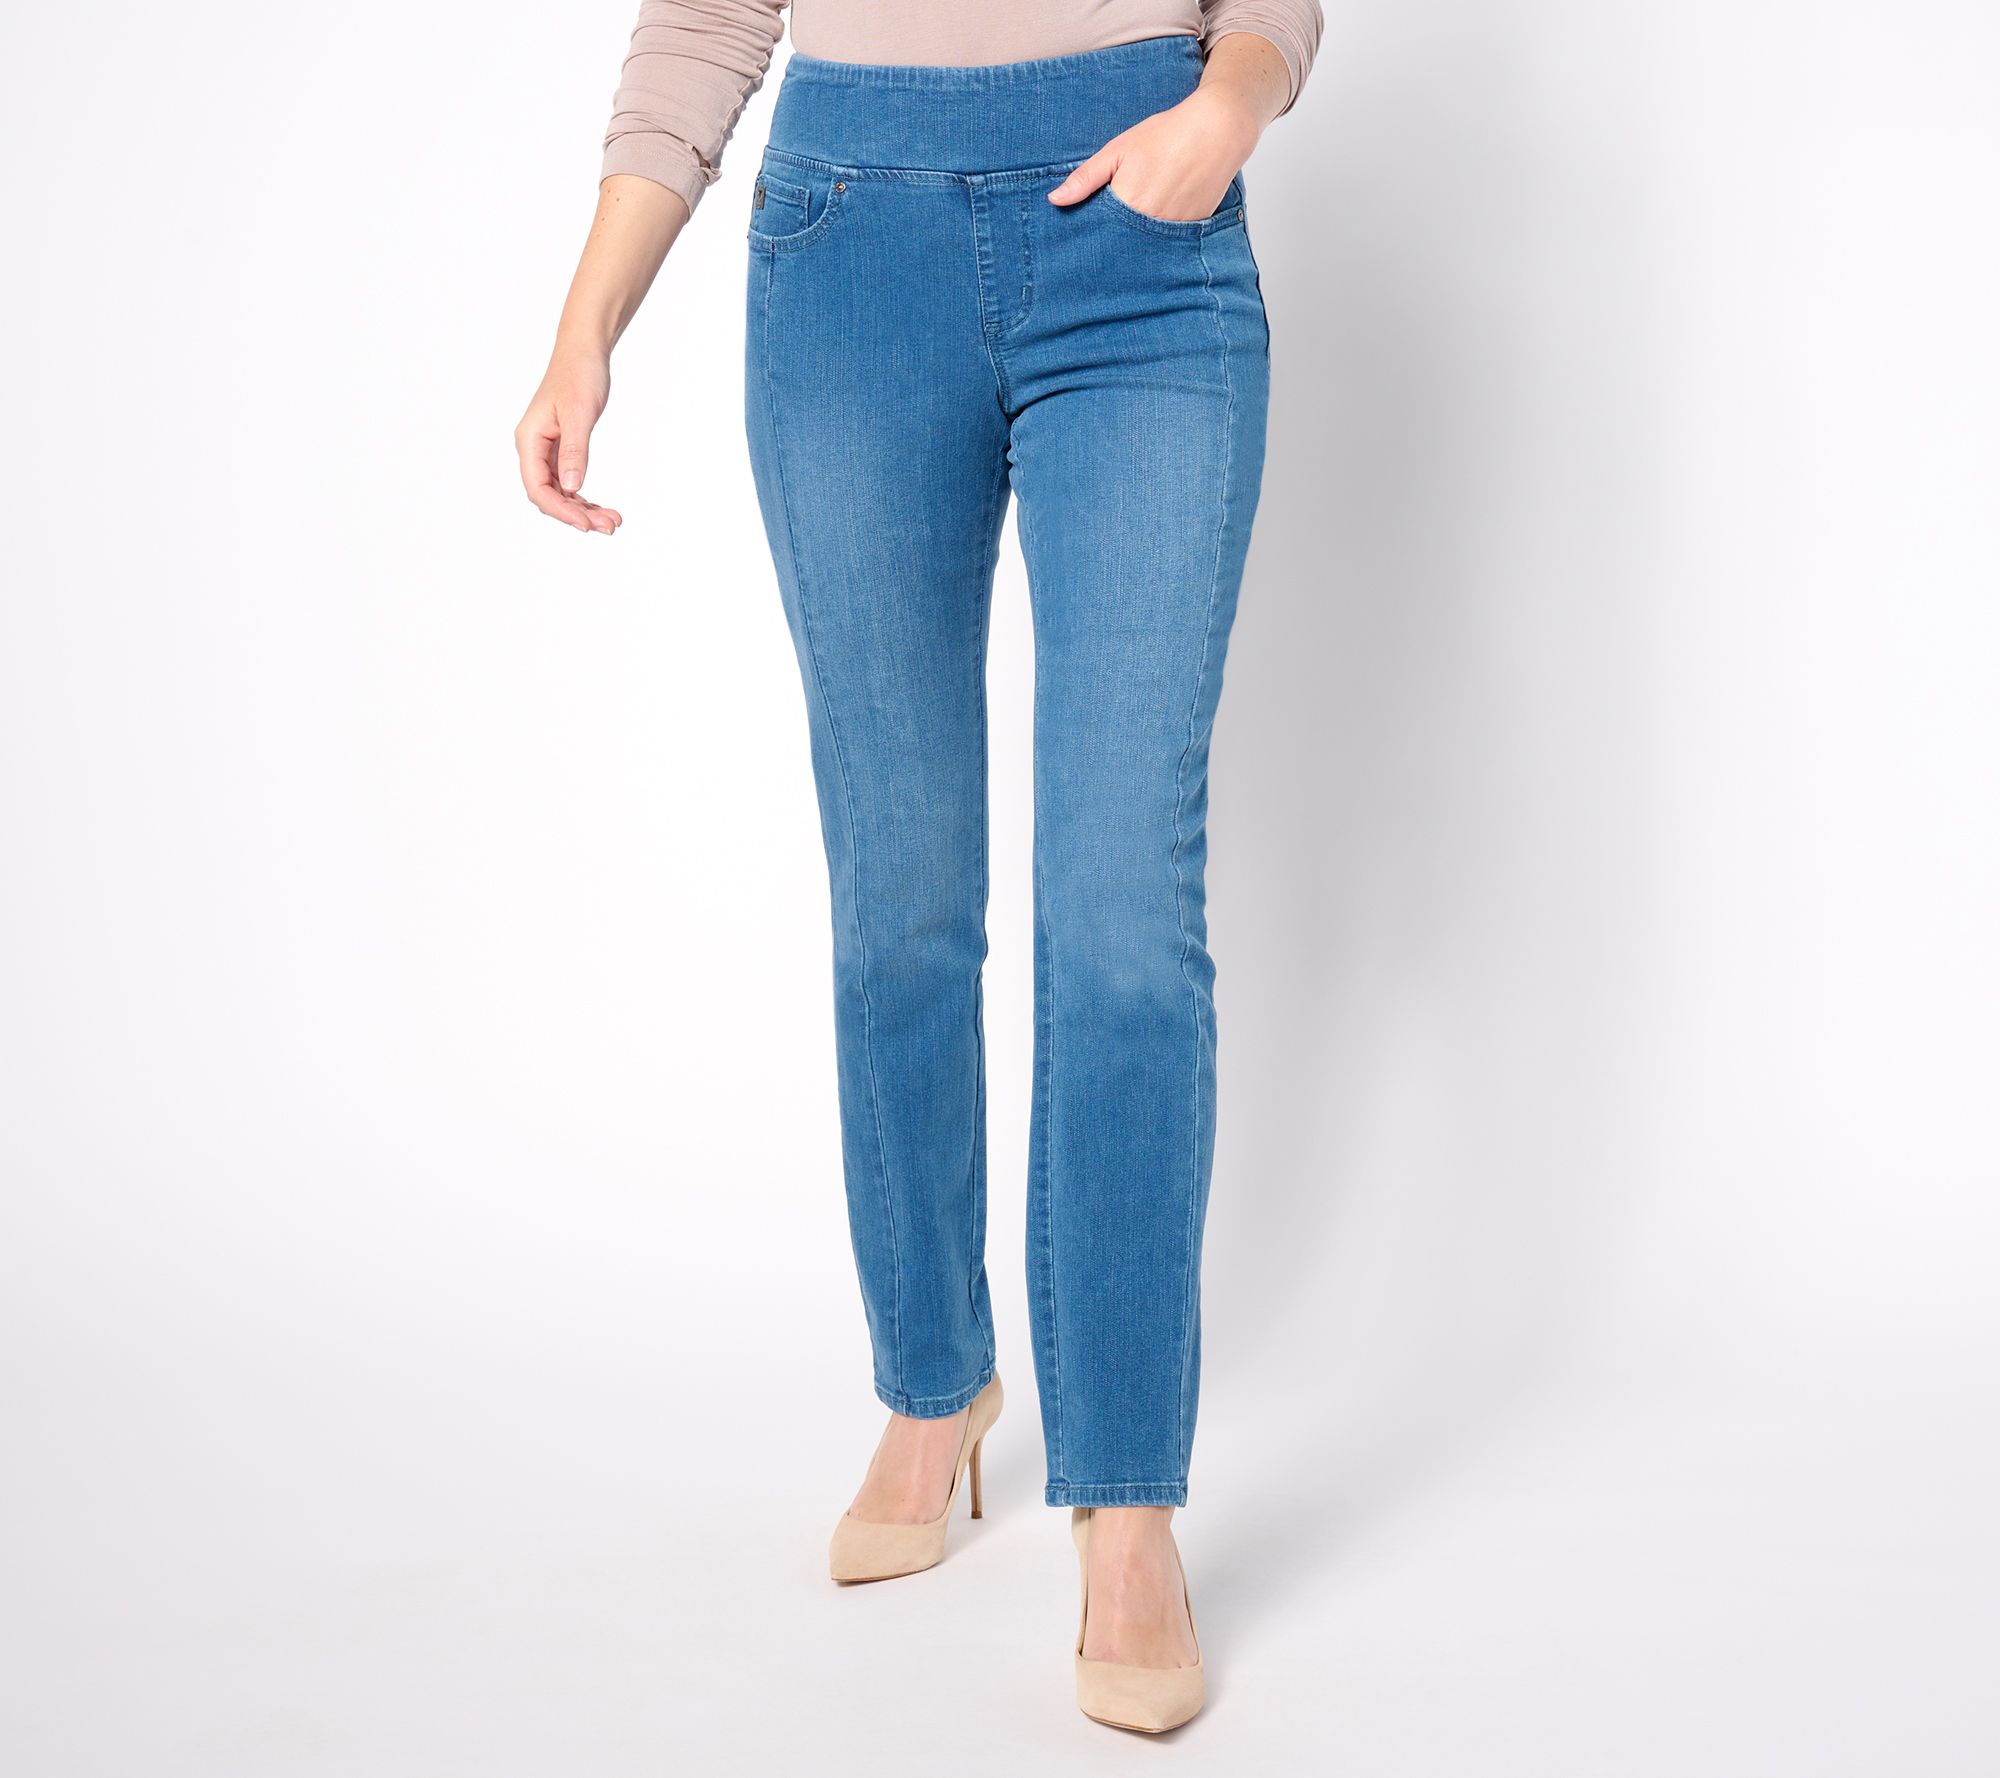 Designers Remix Jeans - Blossom - Medium Denim » Quick Shipping